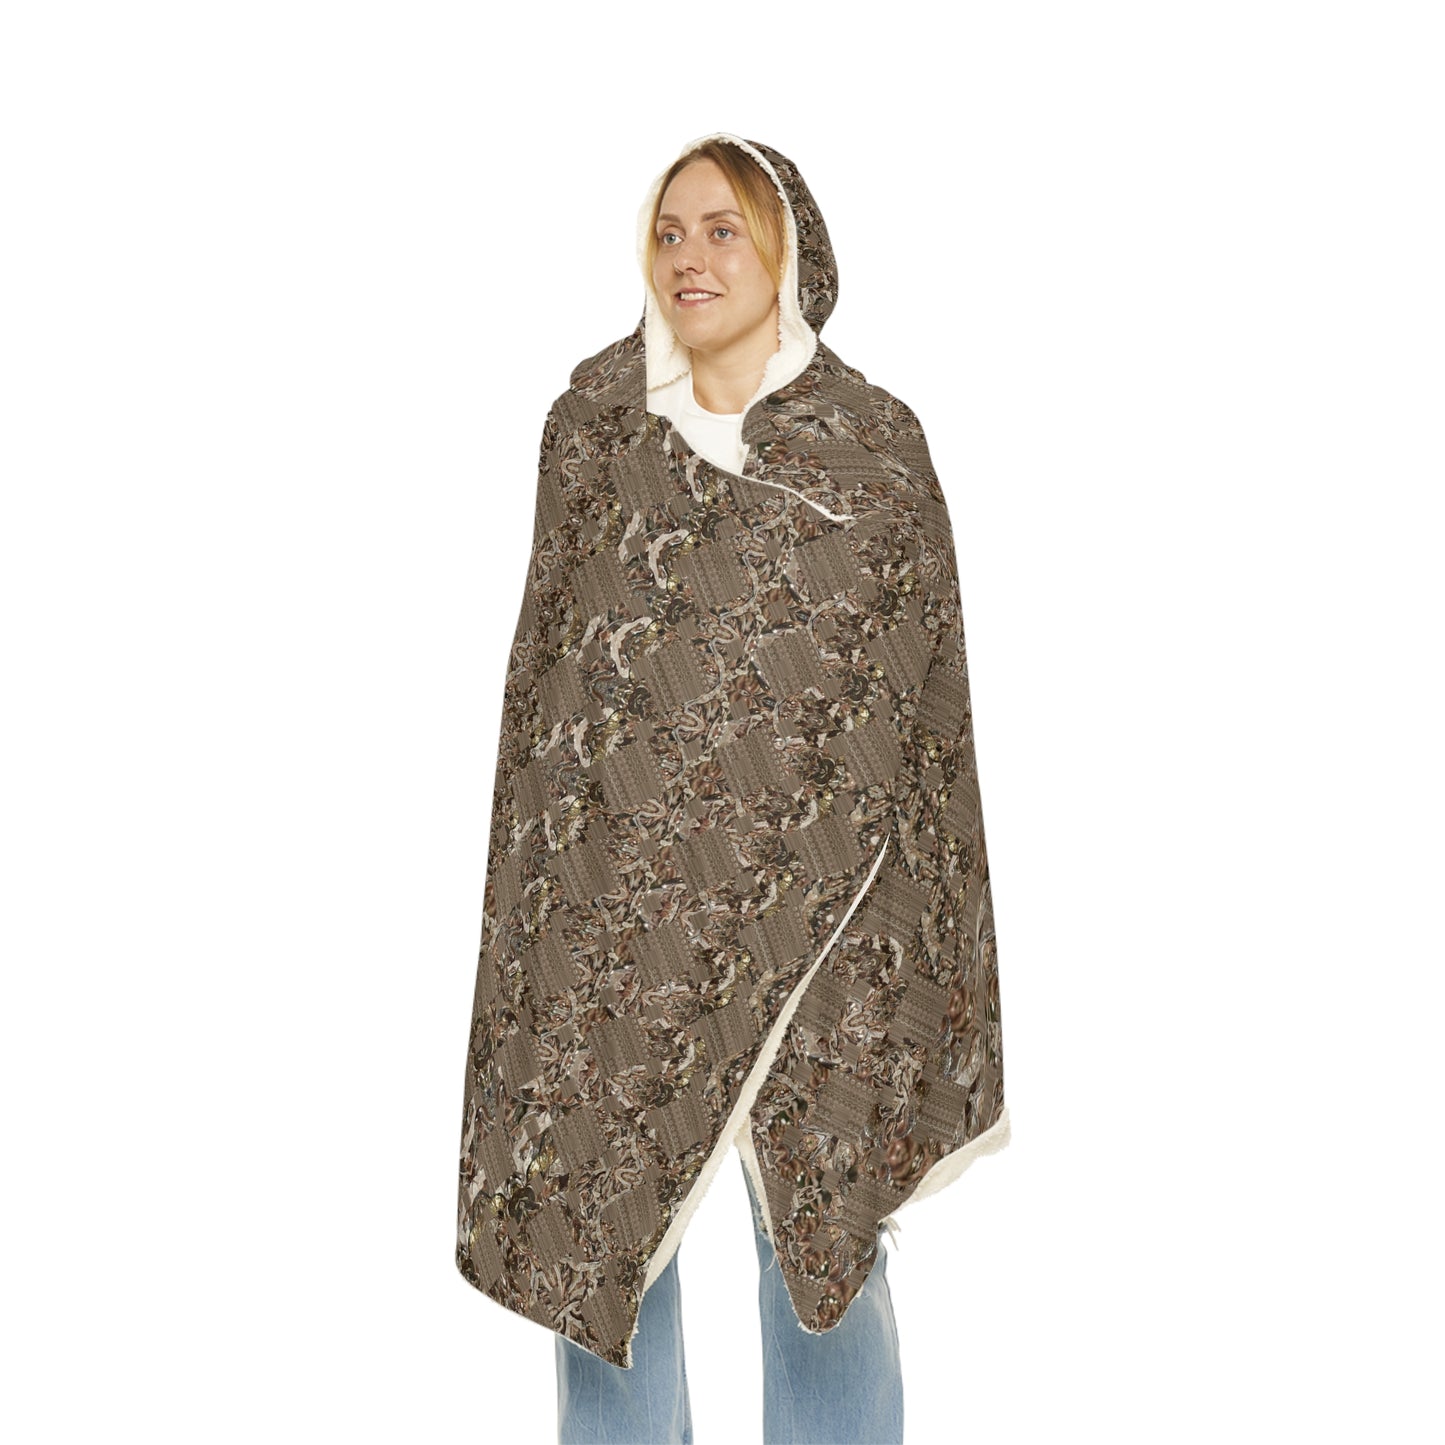 Hooded Snuggle Blanket (Samhain Dream Thaw 9/15 (Novem ex quindecim) RJSTHw2023 RJS